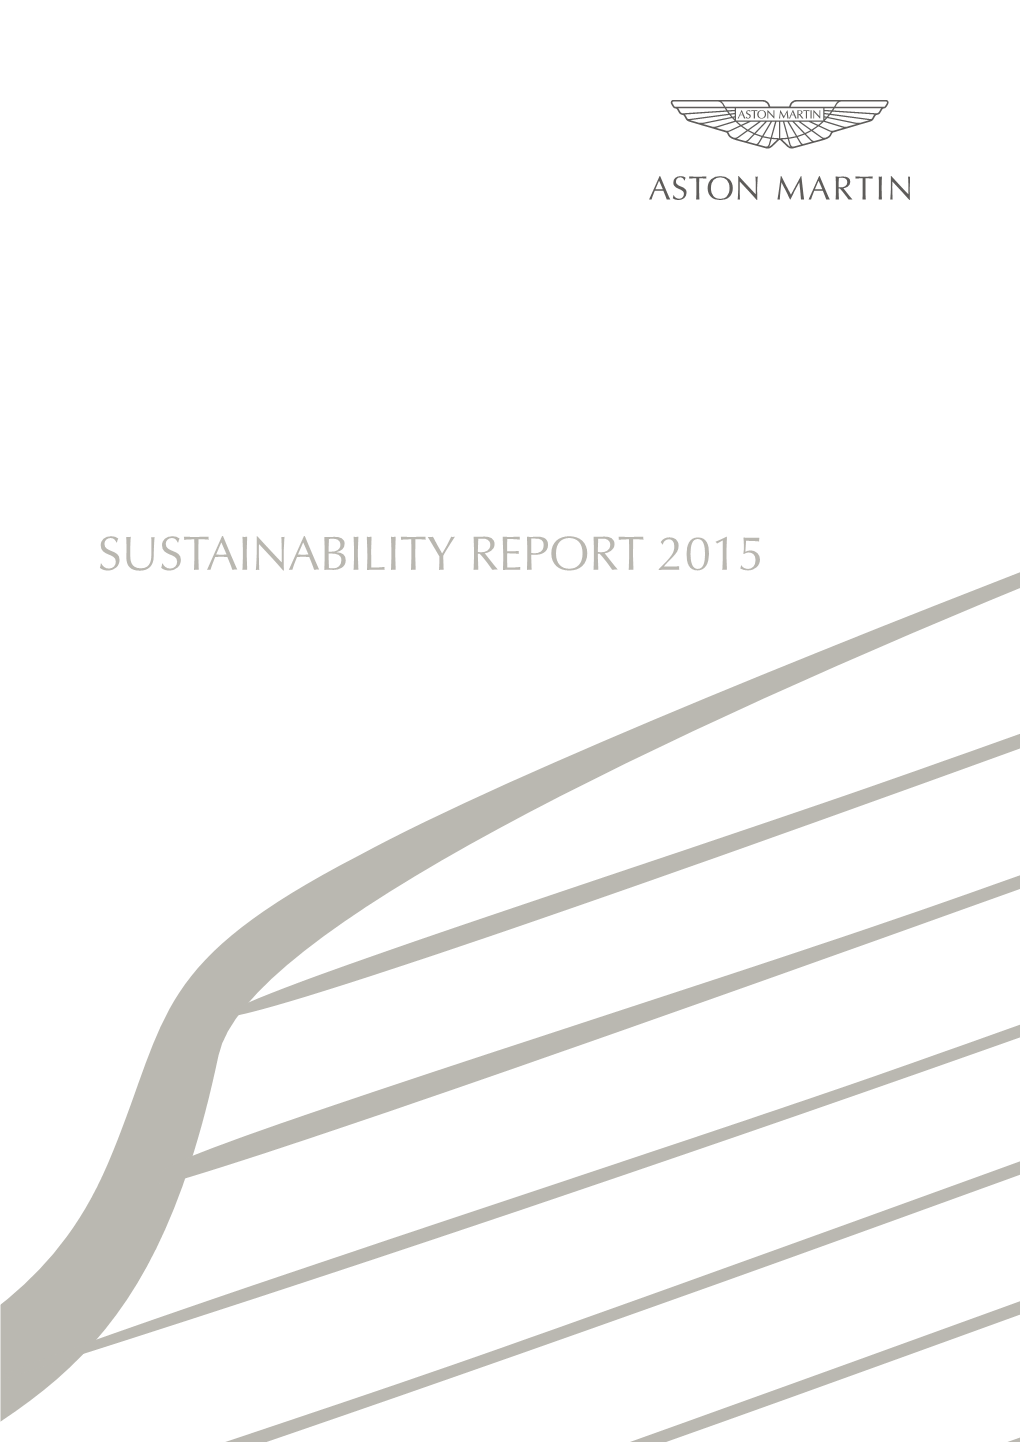 Sustainability Report 2015 Aston Martin Sustainability Report 2015 03